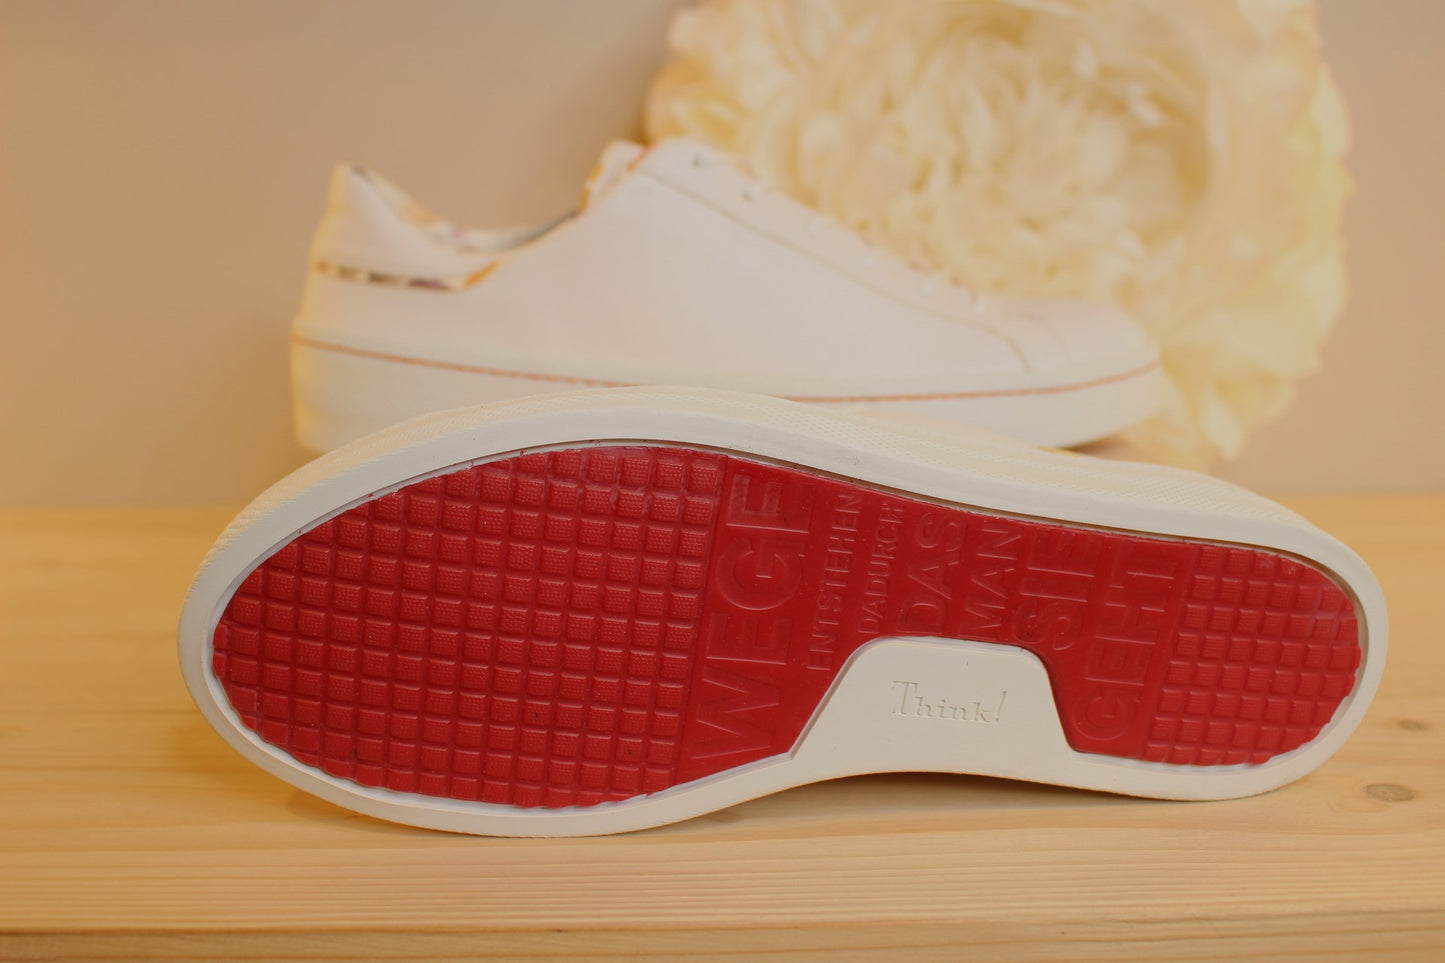 Sneaker cuir blanc pour femme semelle interne amovible THINK